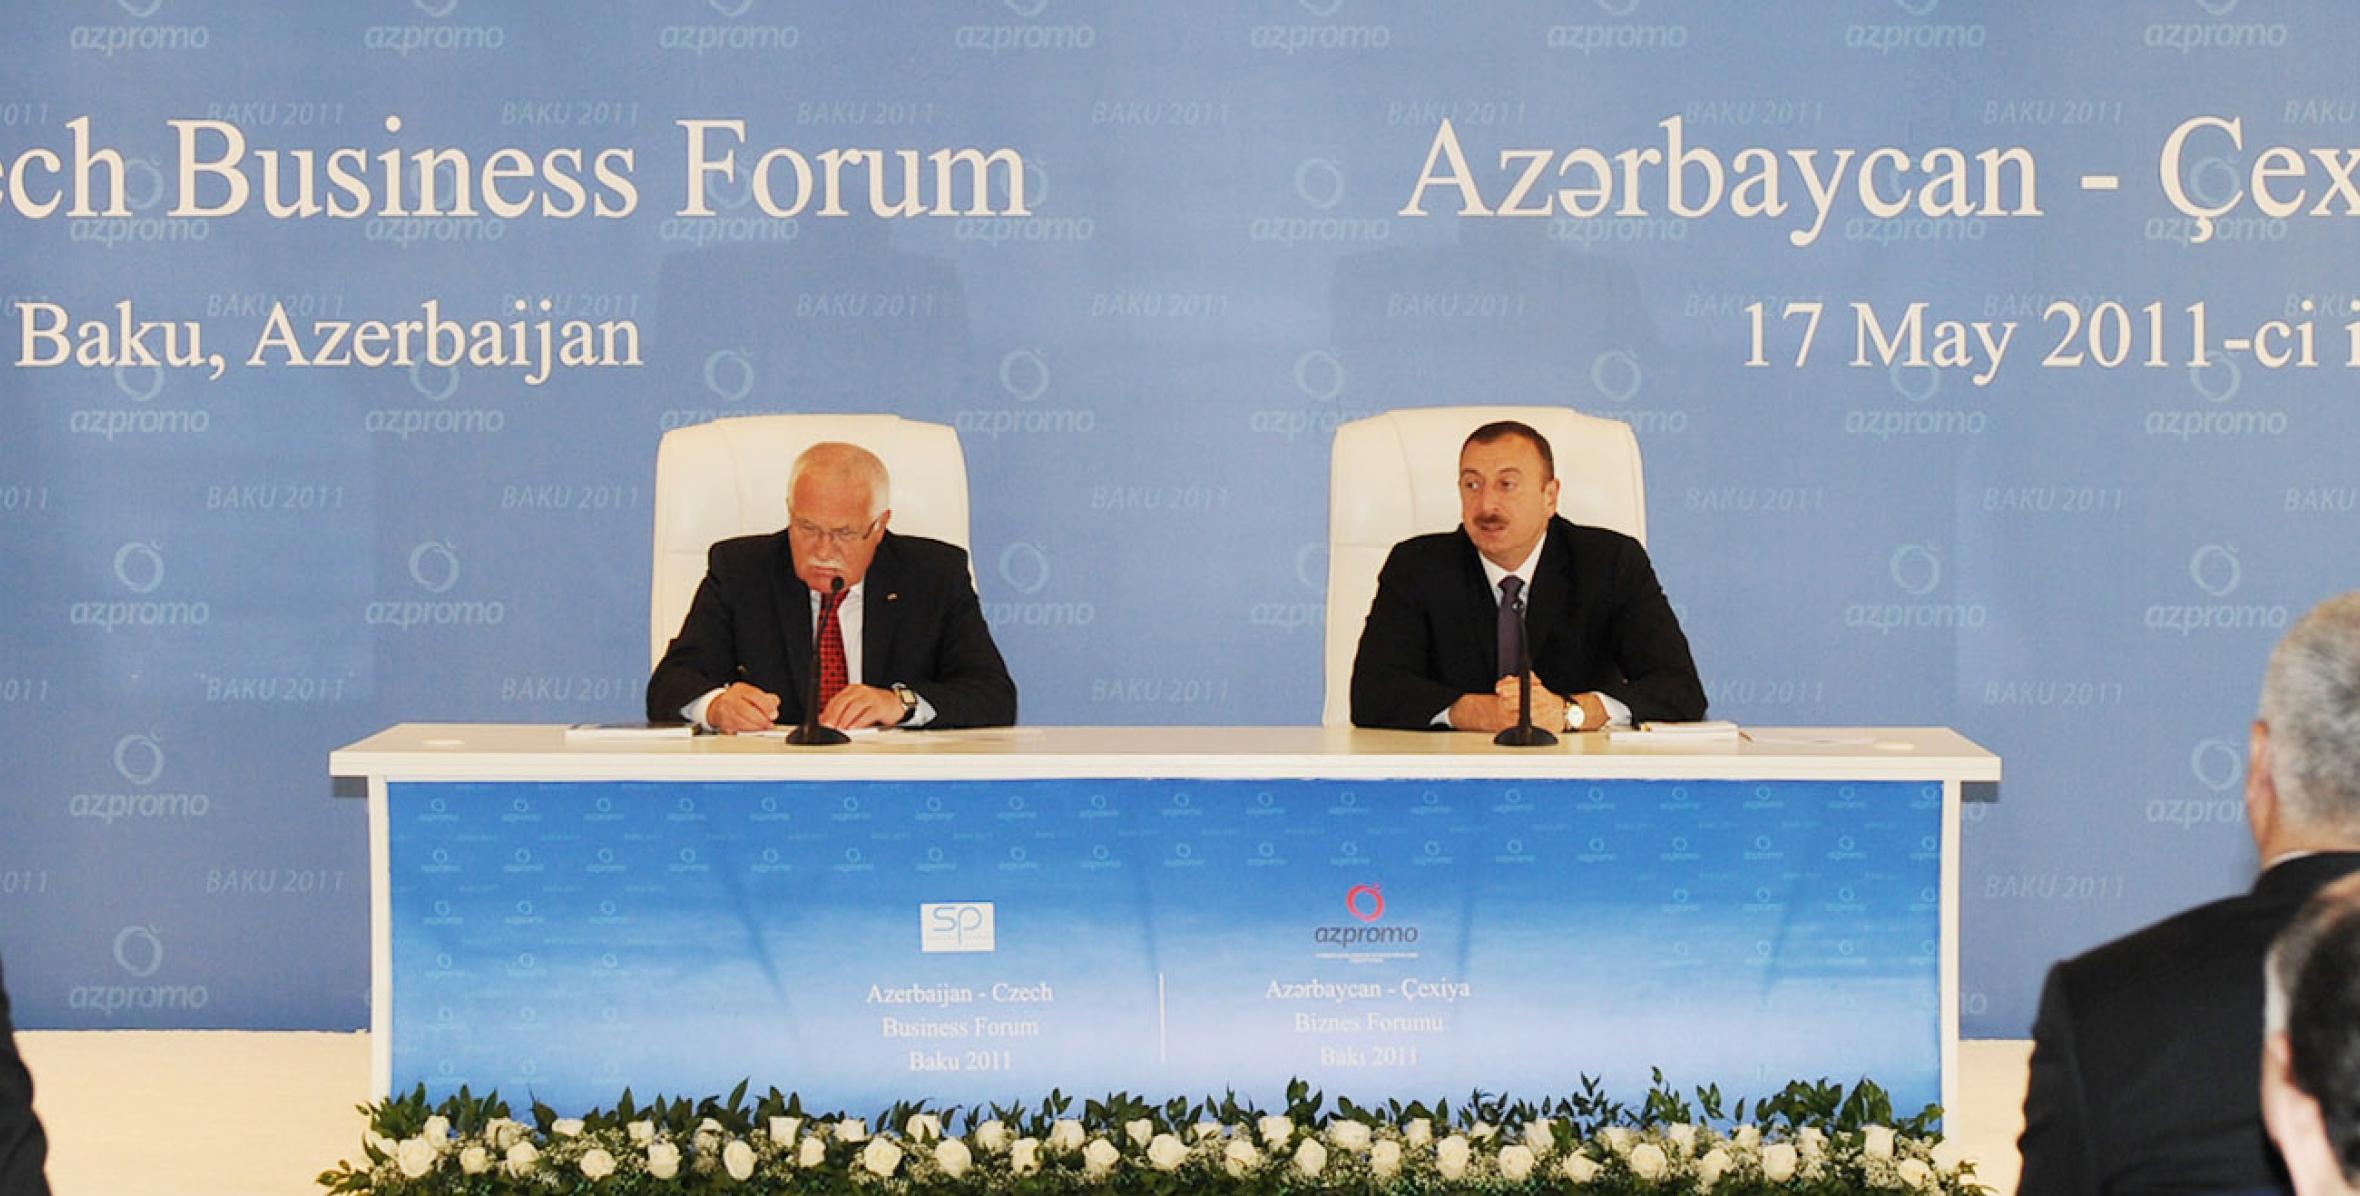 Speech by Ilham Aliyev at the Azerbaijan-Czech Business Forum